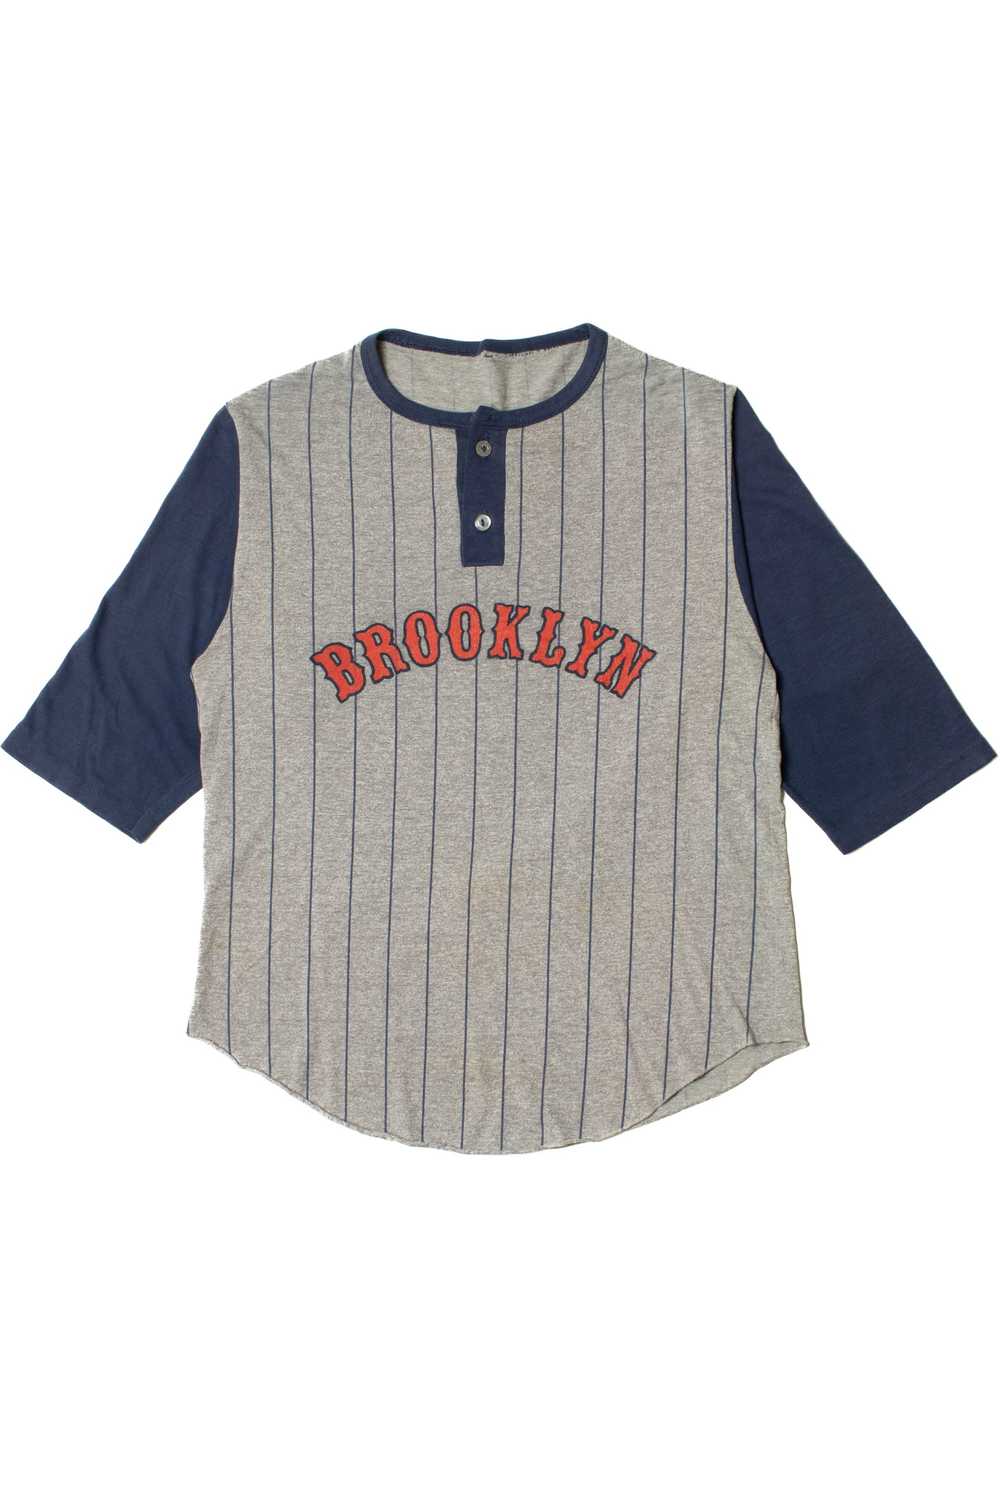 Vintage "Brooklyn" Navy Striped Raglan T-Shirt - image 1